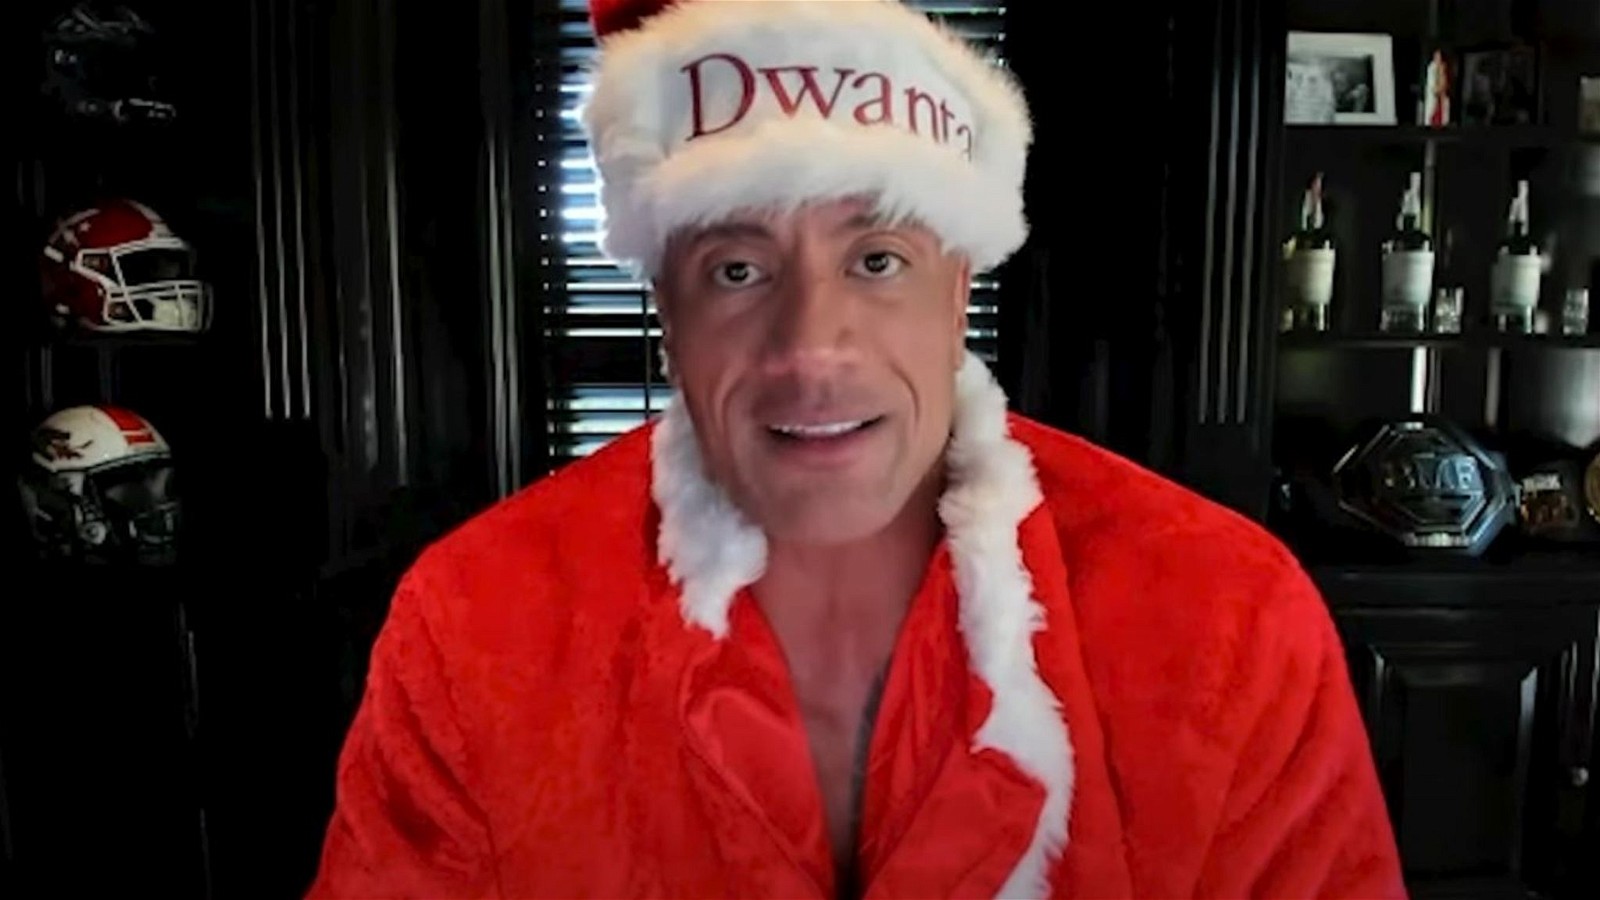 Dwayne Johnson as Santa Claus